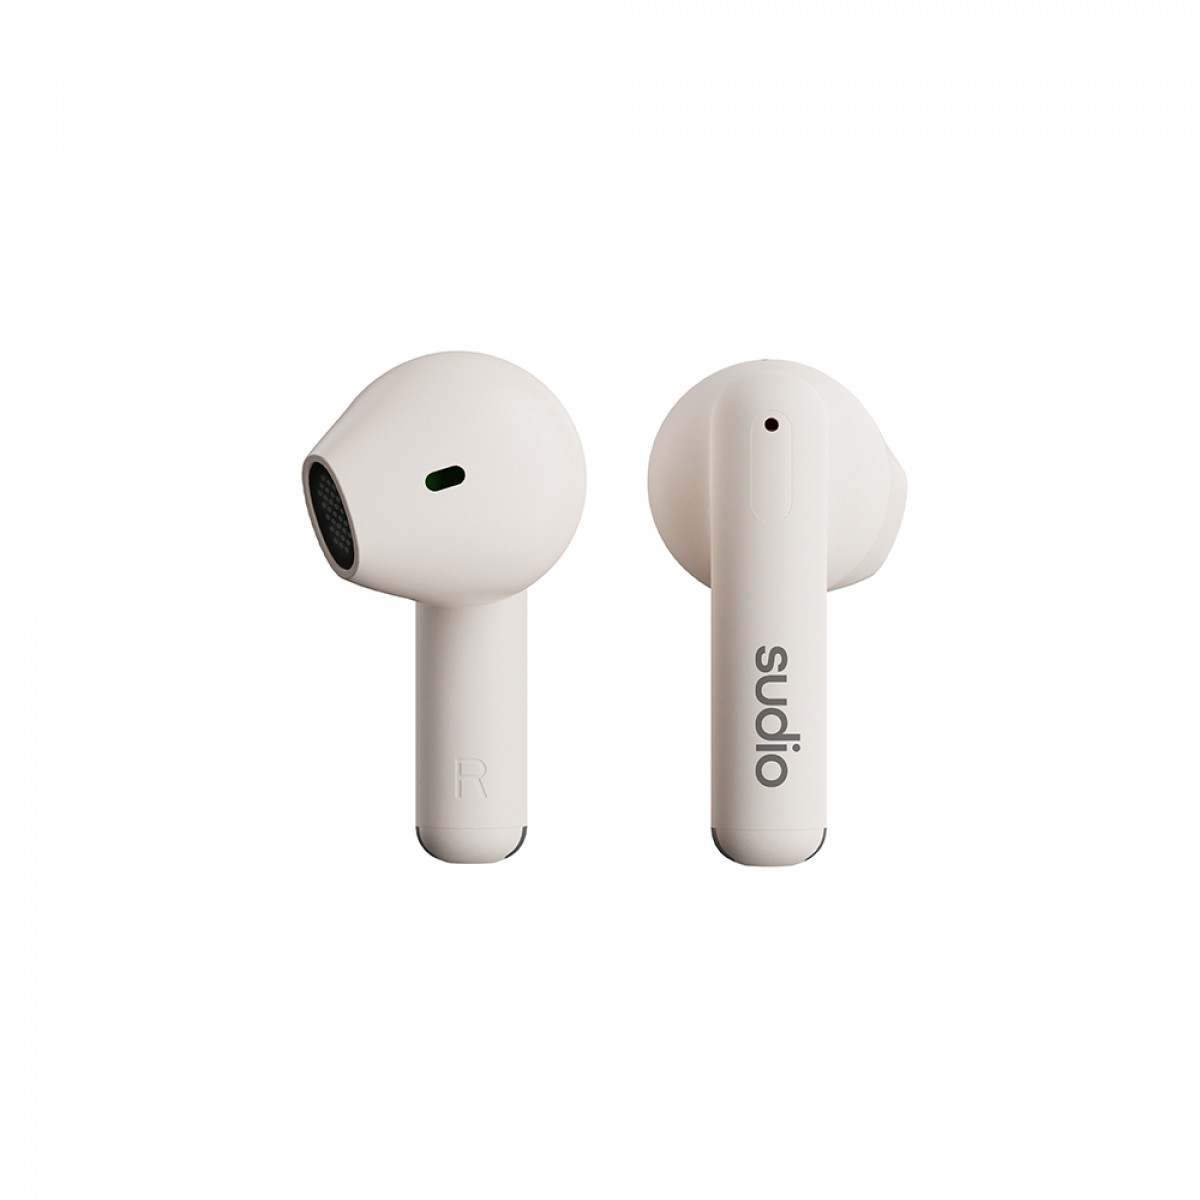 Weiß, In-Ear Kopfhörer Weiß Bluetooth In-ear A1 SUDIO Kopfhörer TWS